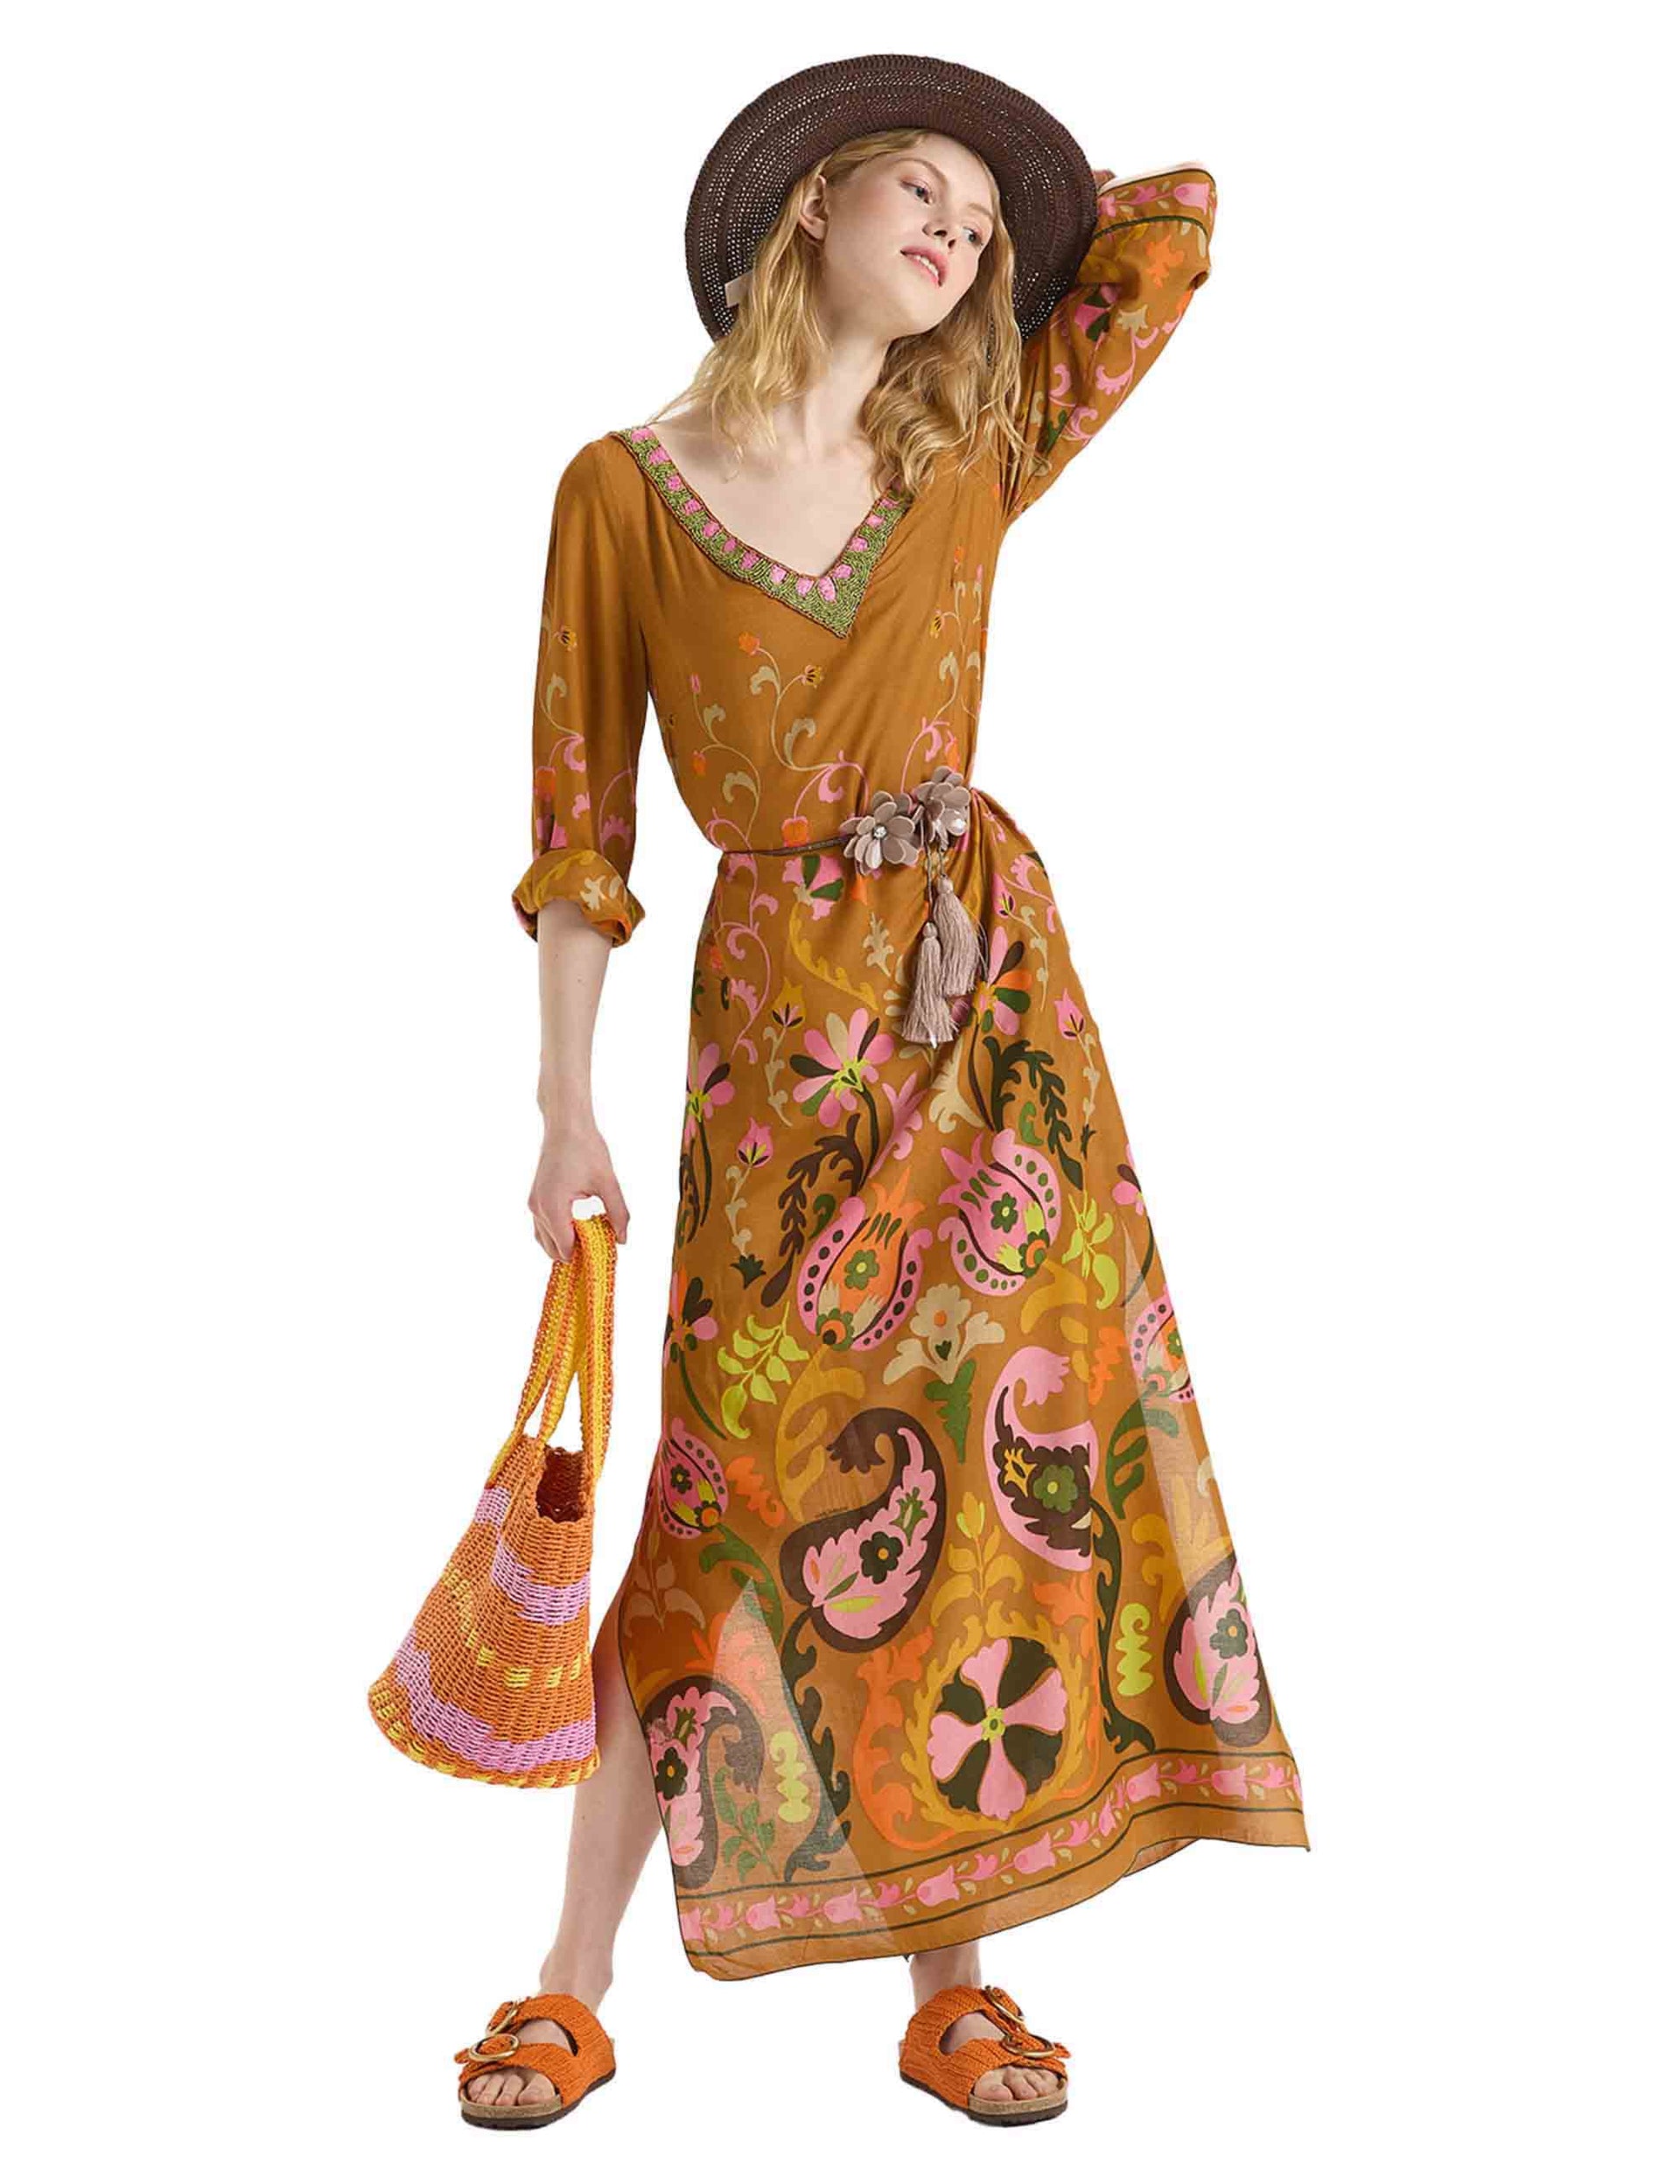 Fortuna Print women's dresses in orange patterned fabric